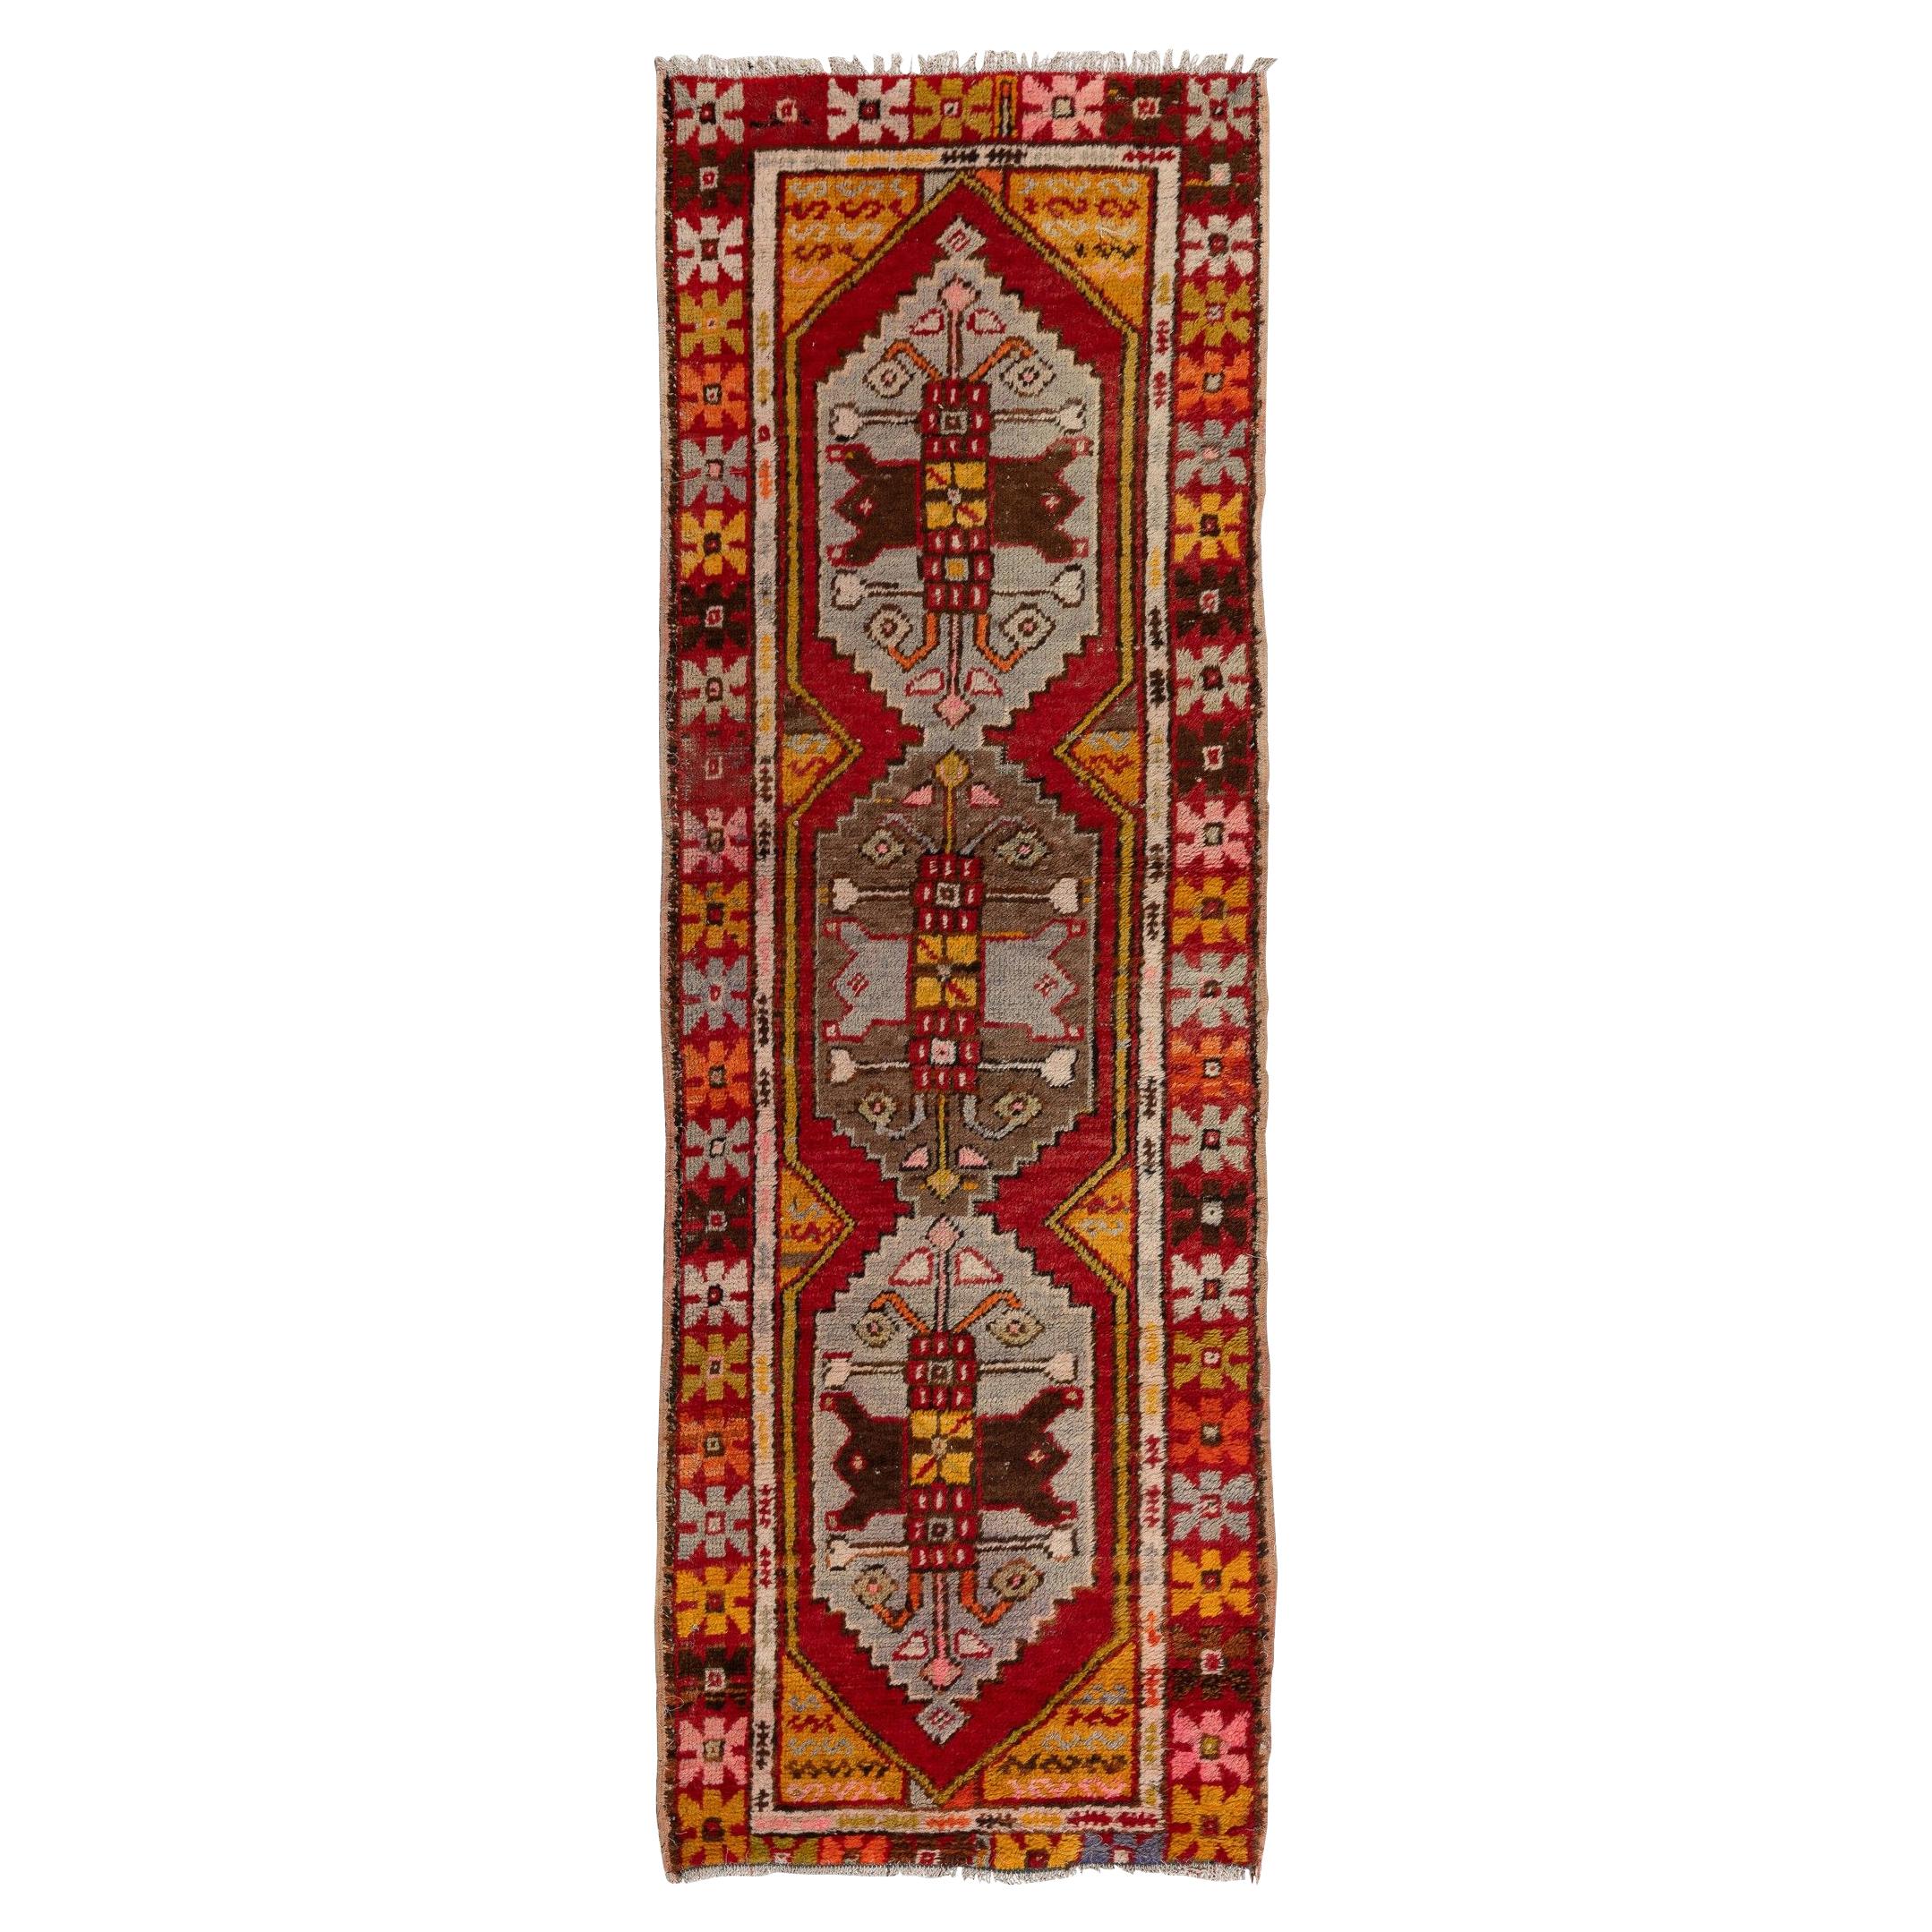 2.7x8.5 Ft Vintage Tribal Turkish Runner Rug in Red. Hand Made Corridor Carpet For Sale